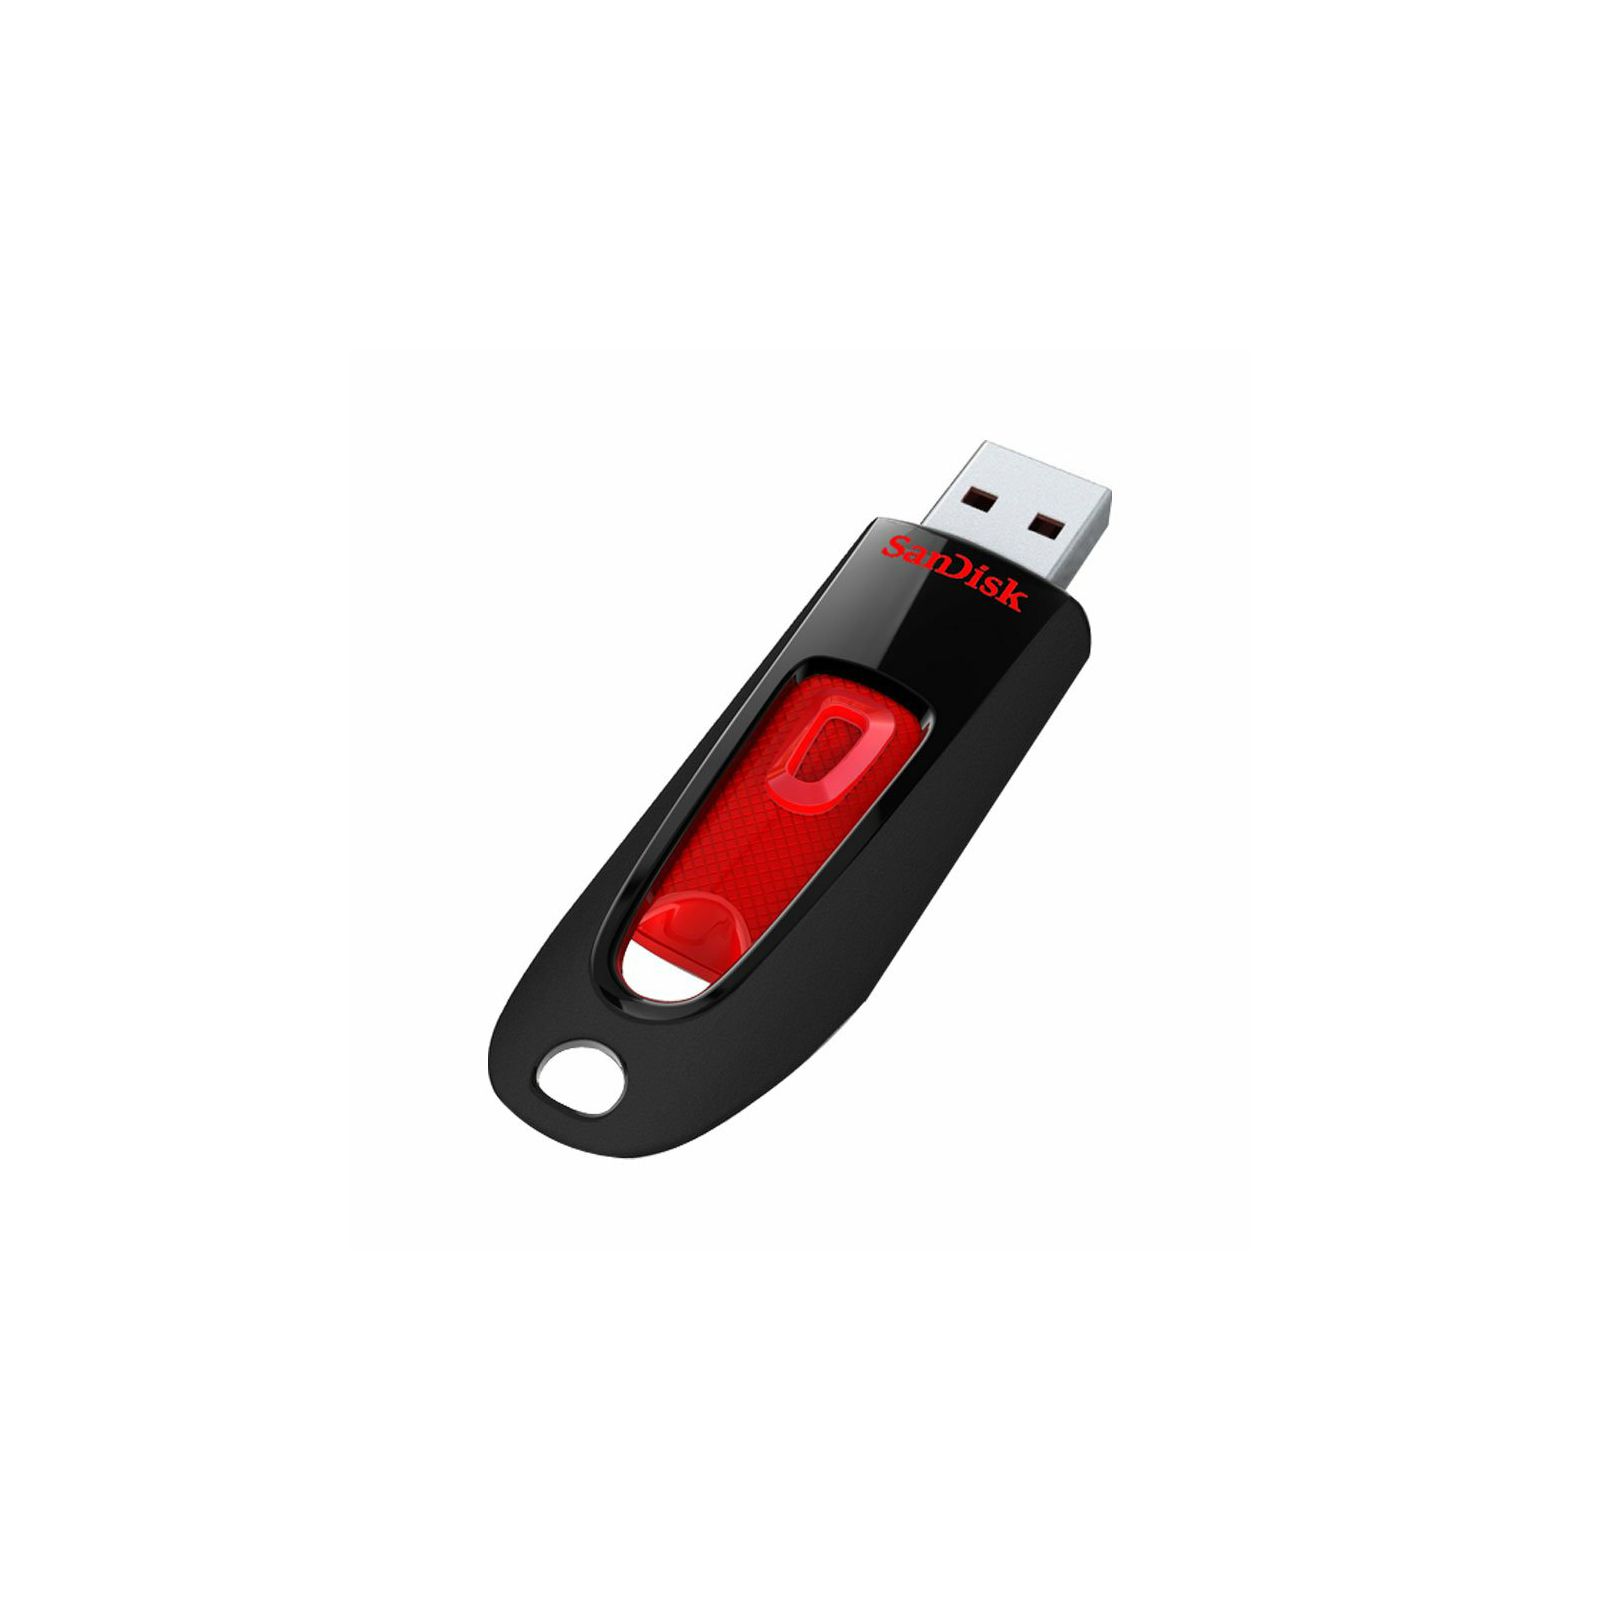 SanDisk Ultra 8GB SDCZ45-008G-U46 USB Memory Stick